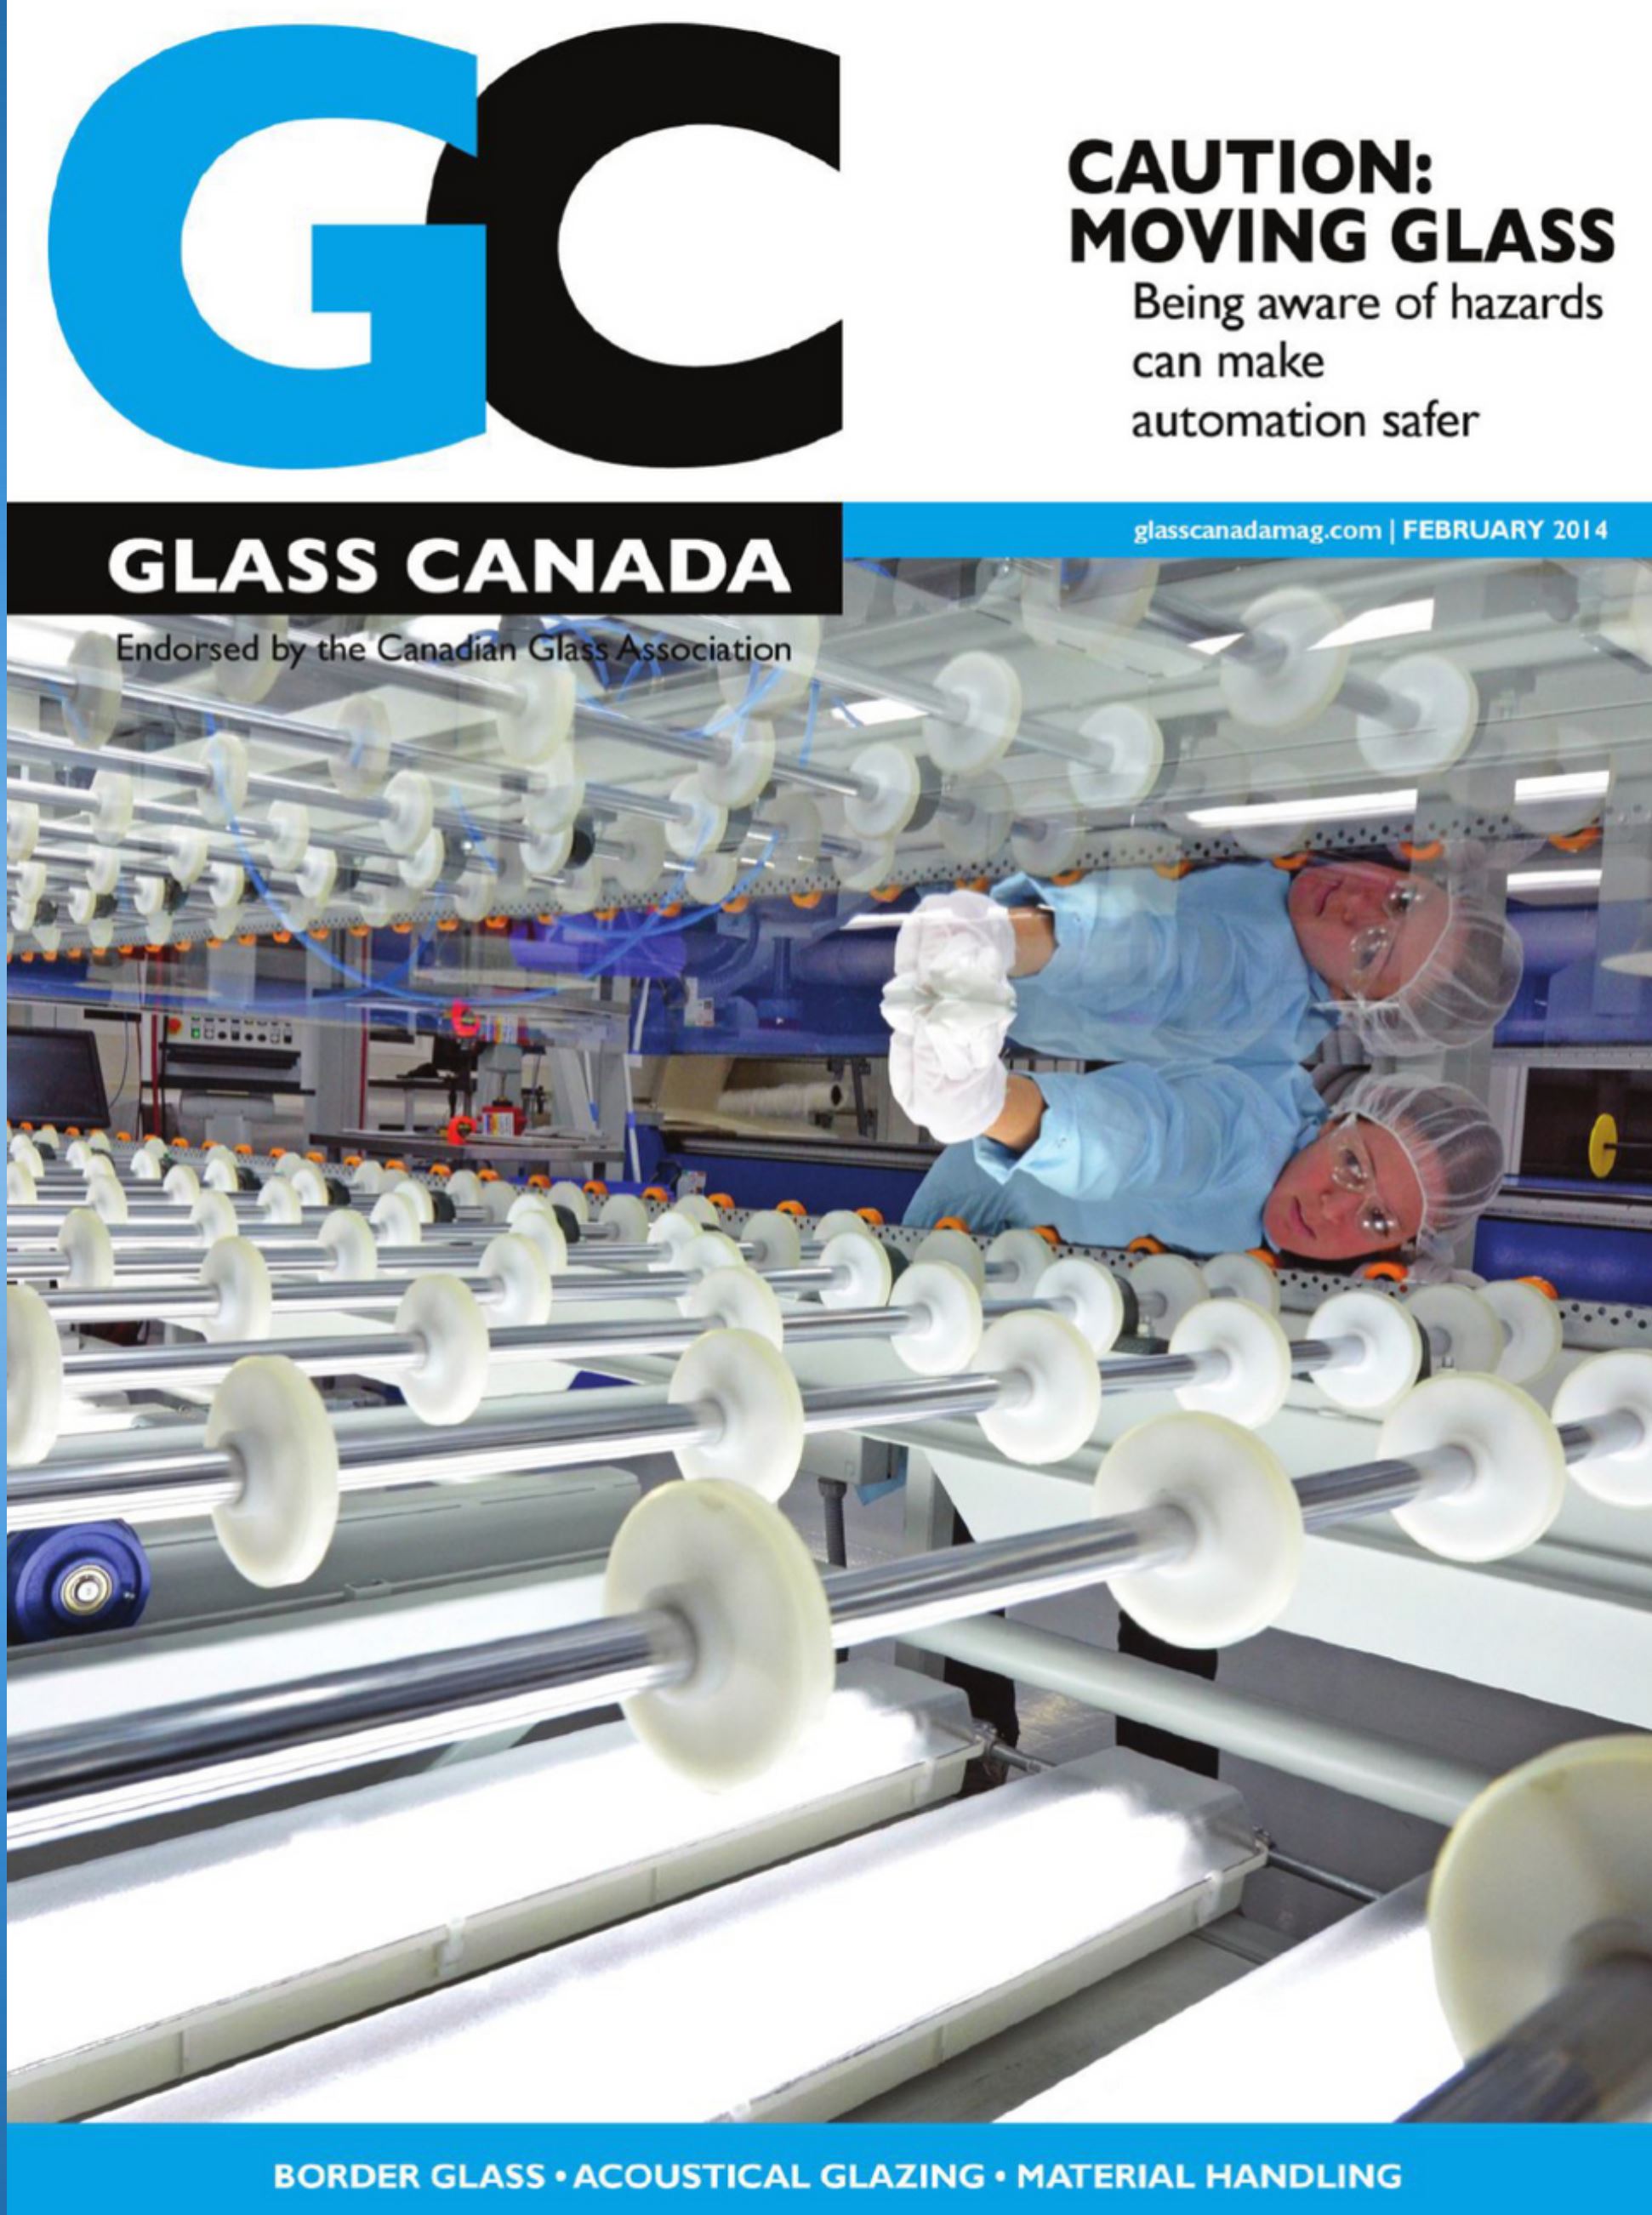 Glass Canada – CAUTION: MOVING GLASS